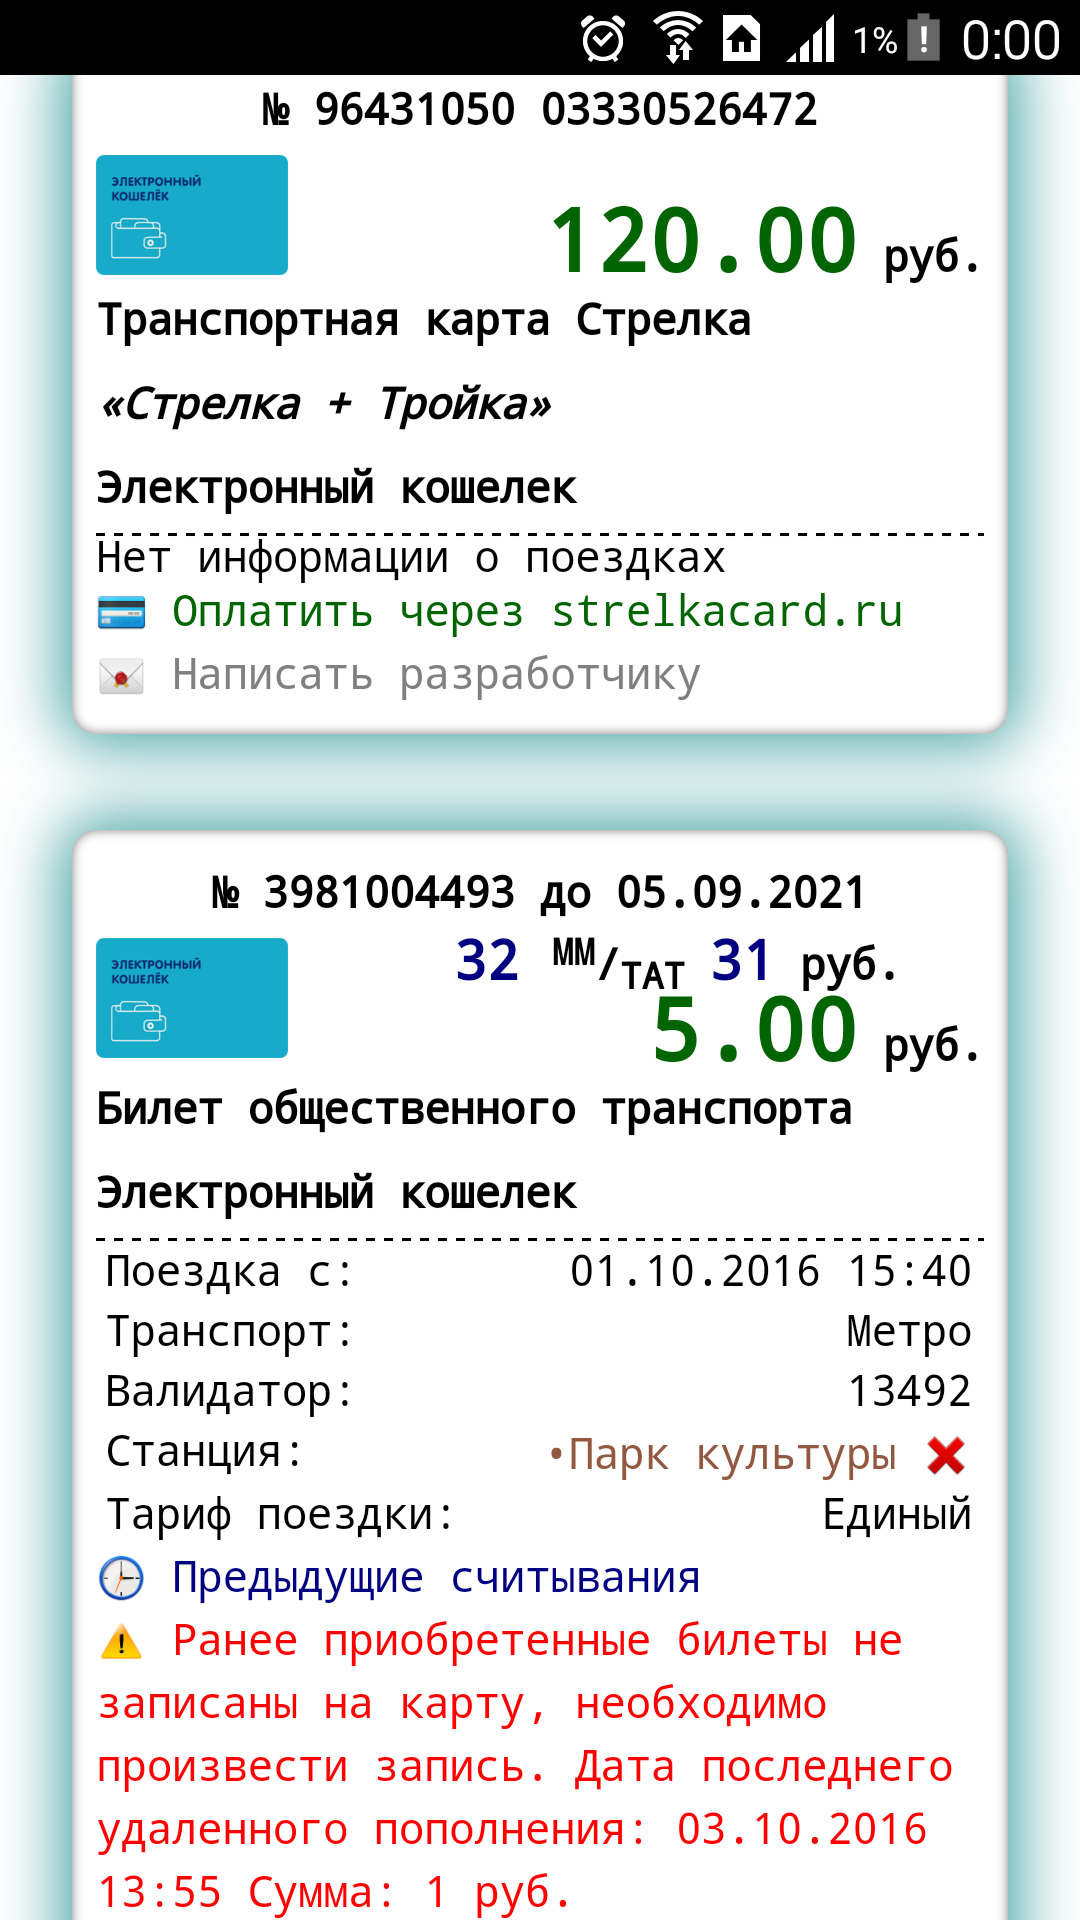 Android application Транспортные карты Москвы screenshort